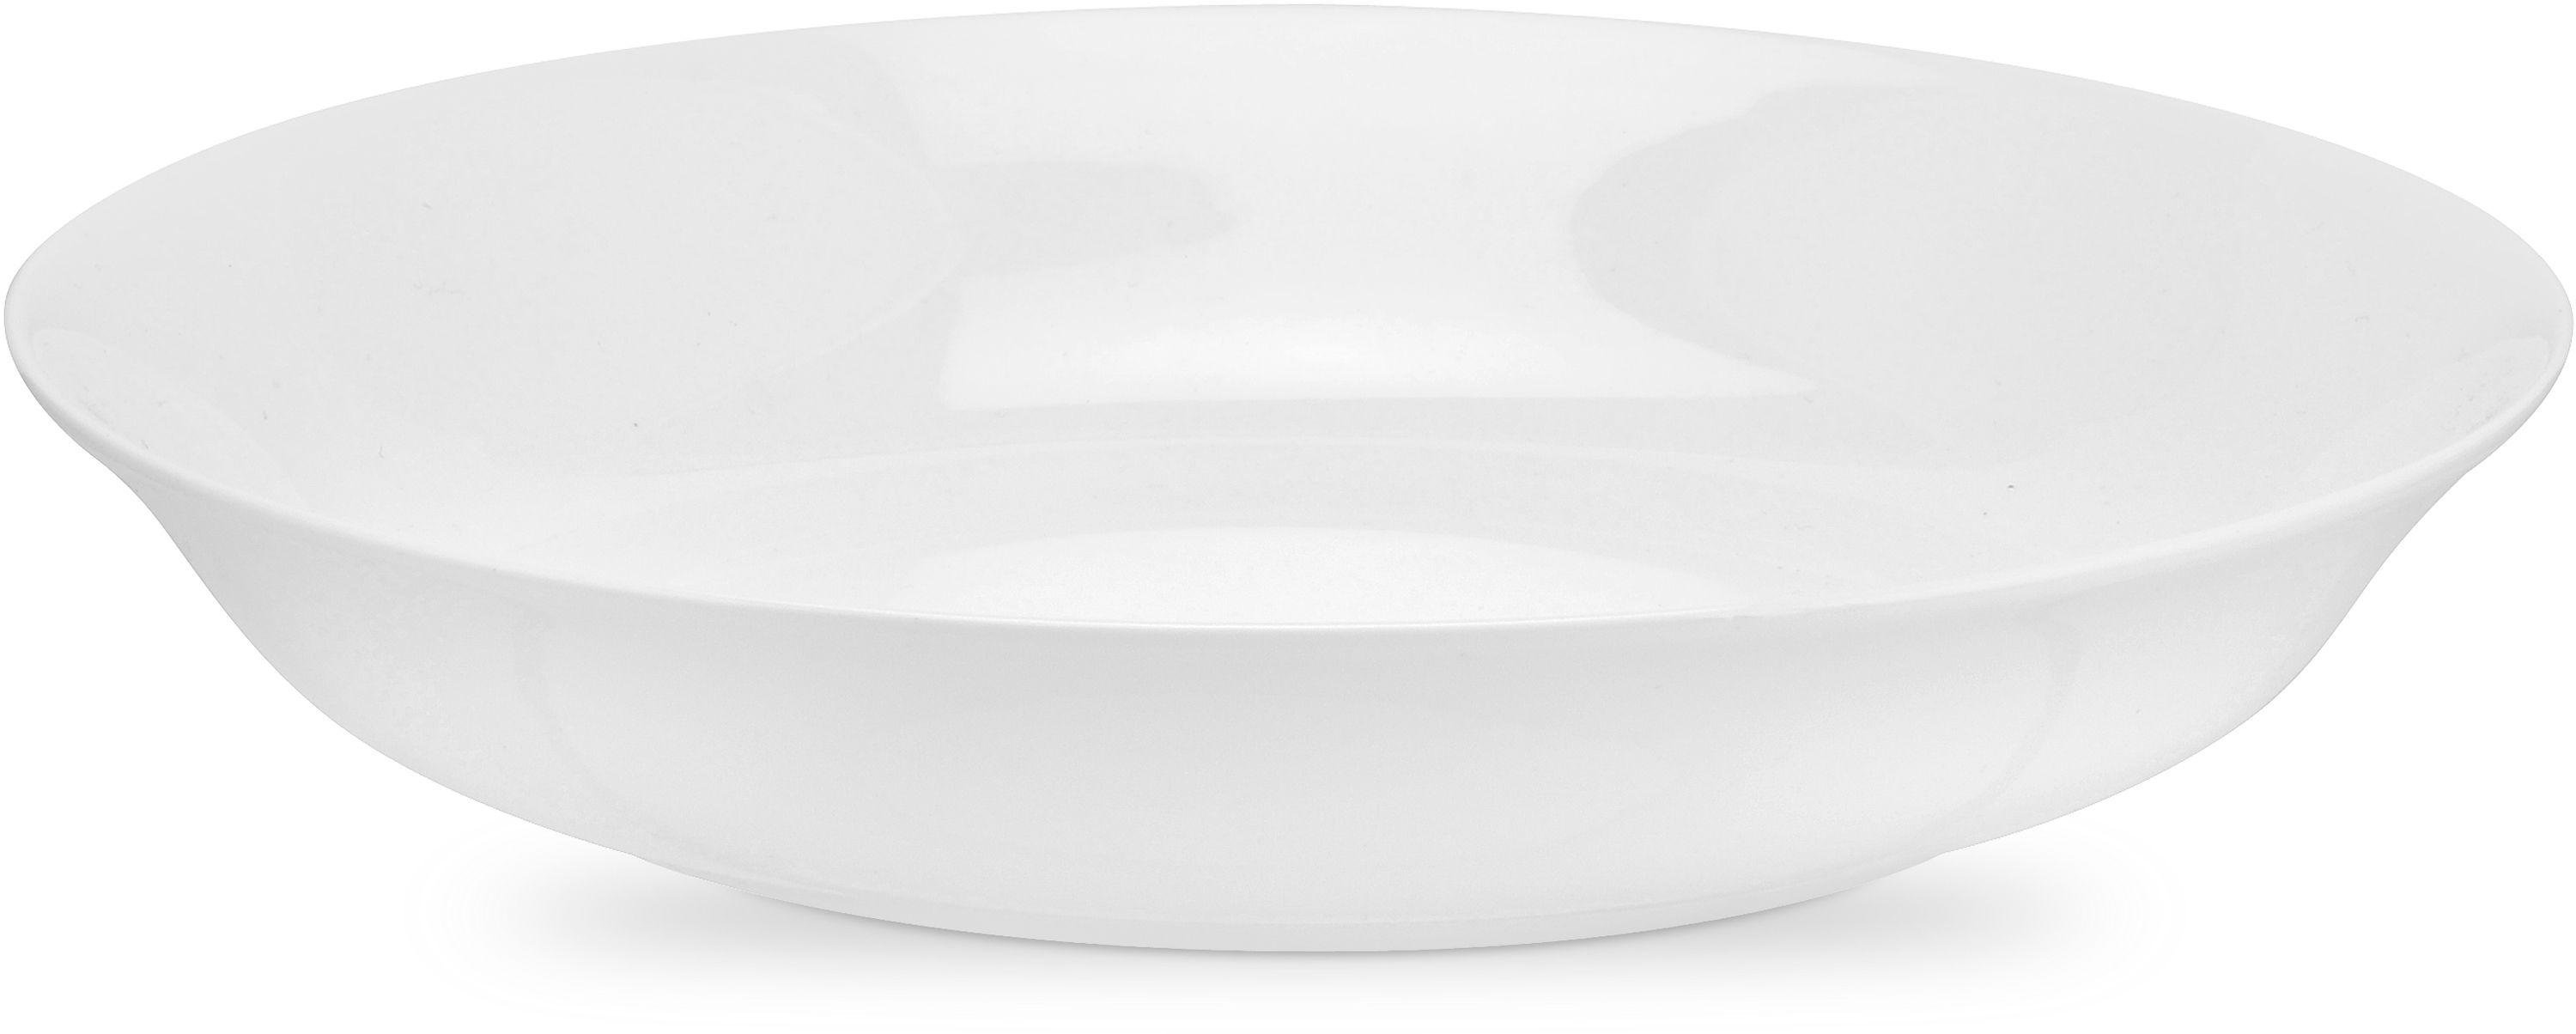 Royal Worcester Serendipity Set of 4 Ceramic Bowls - White